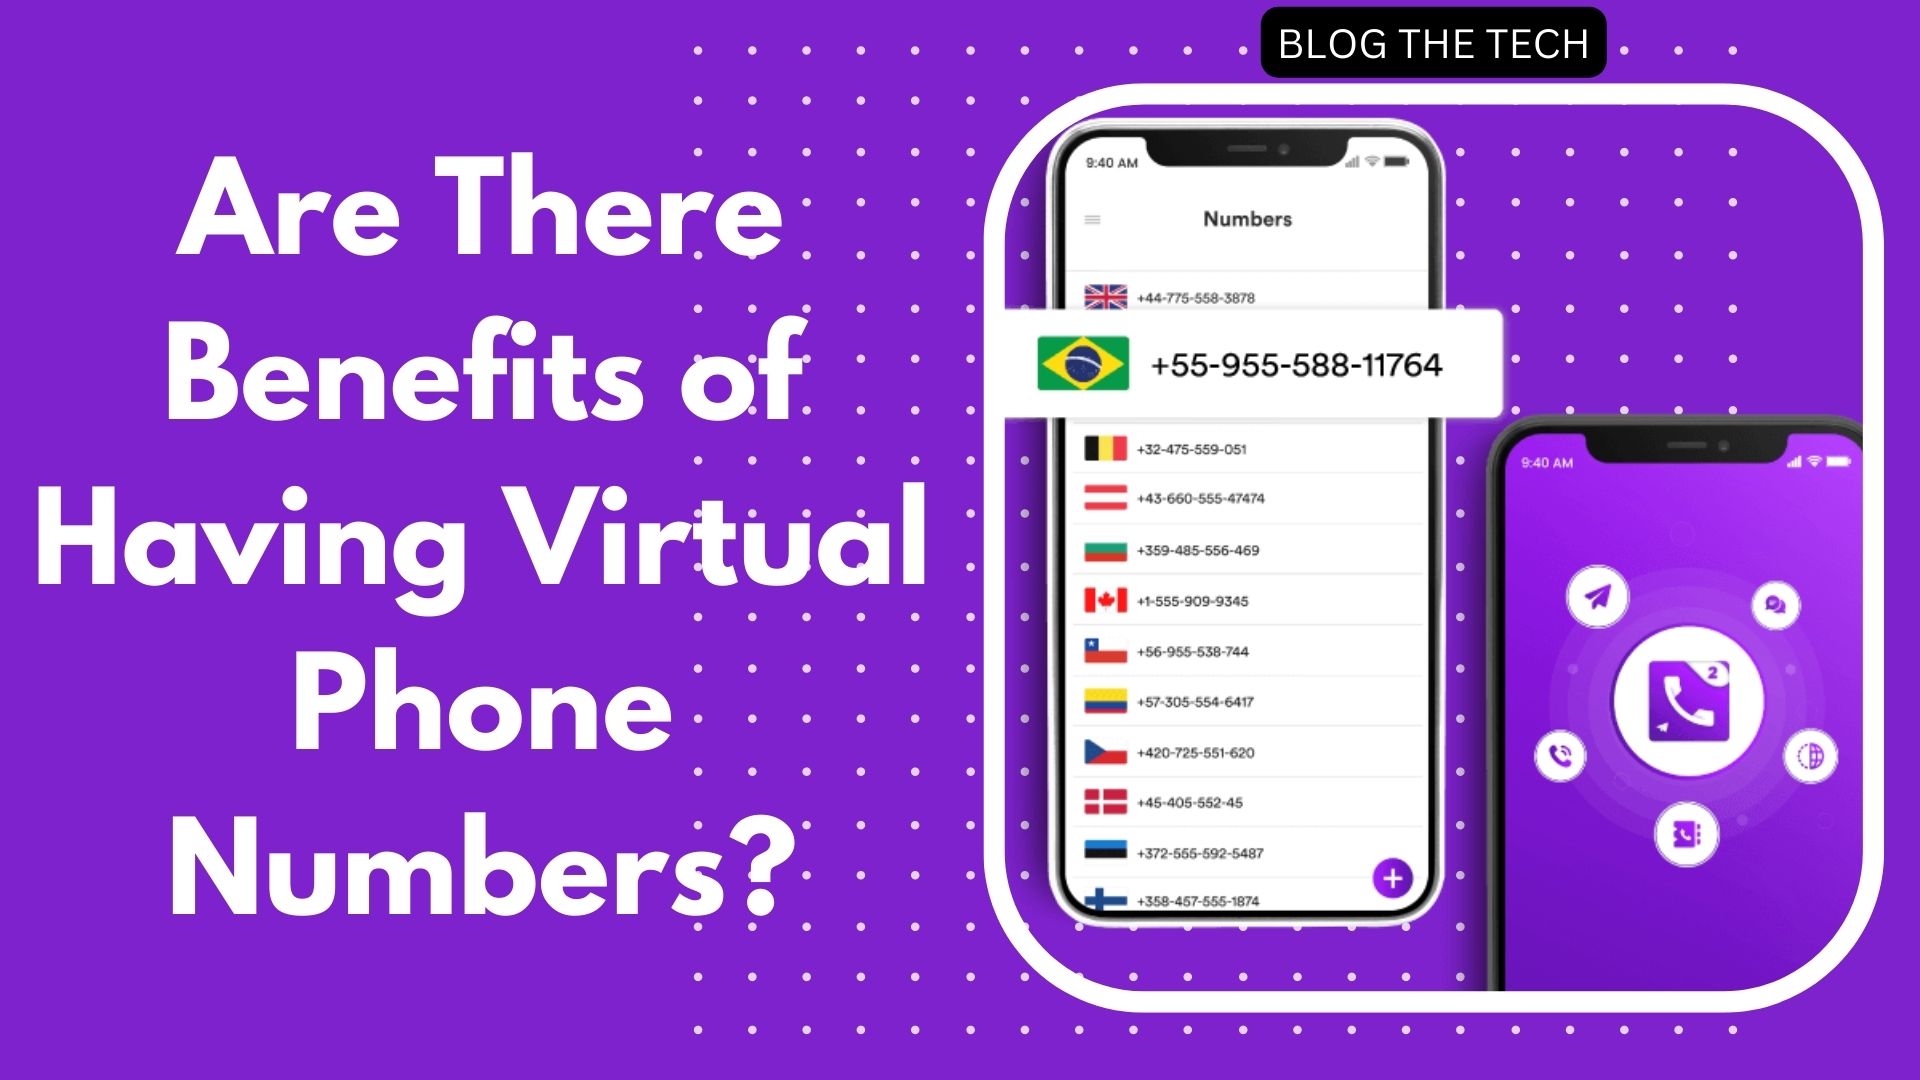 6 Benefits of Having Virtual Phone Numbers